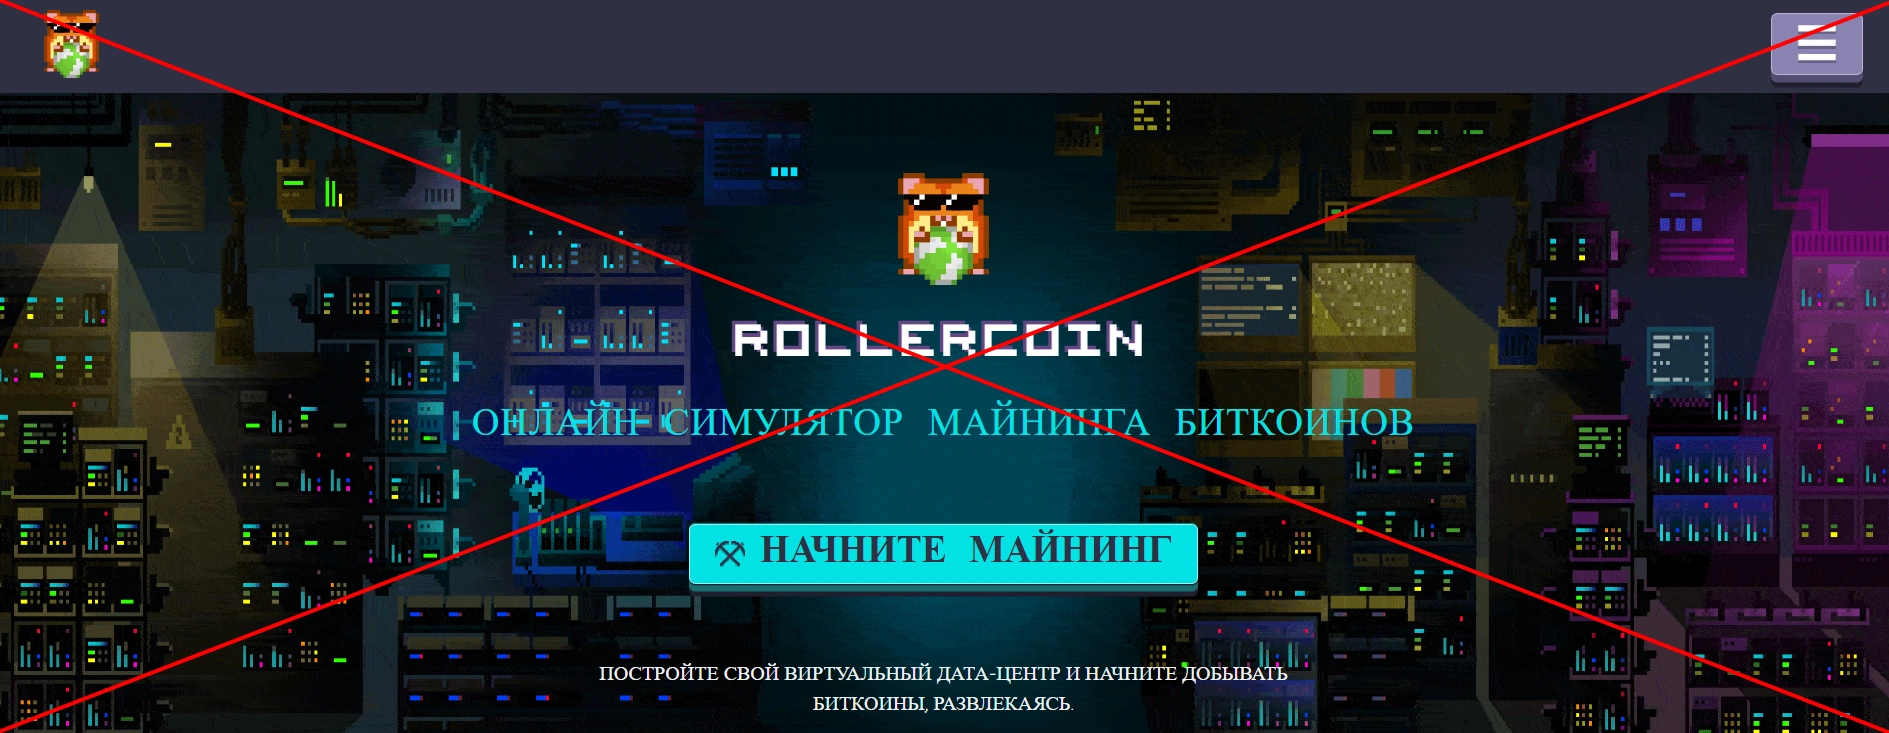 Rollercoin - отзывы и обзор rollercoin.com. Заработок играя